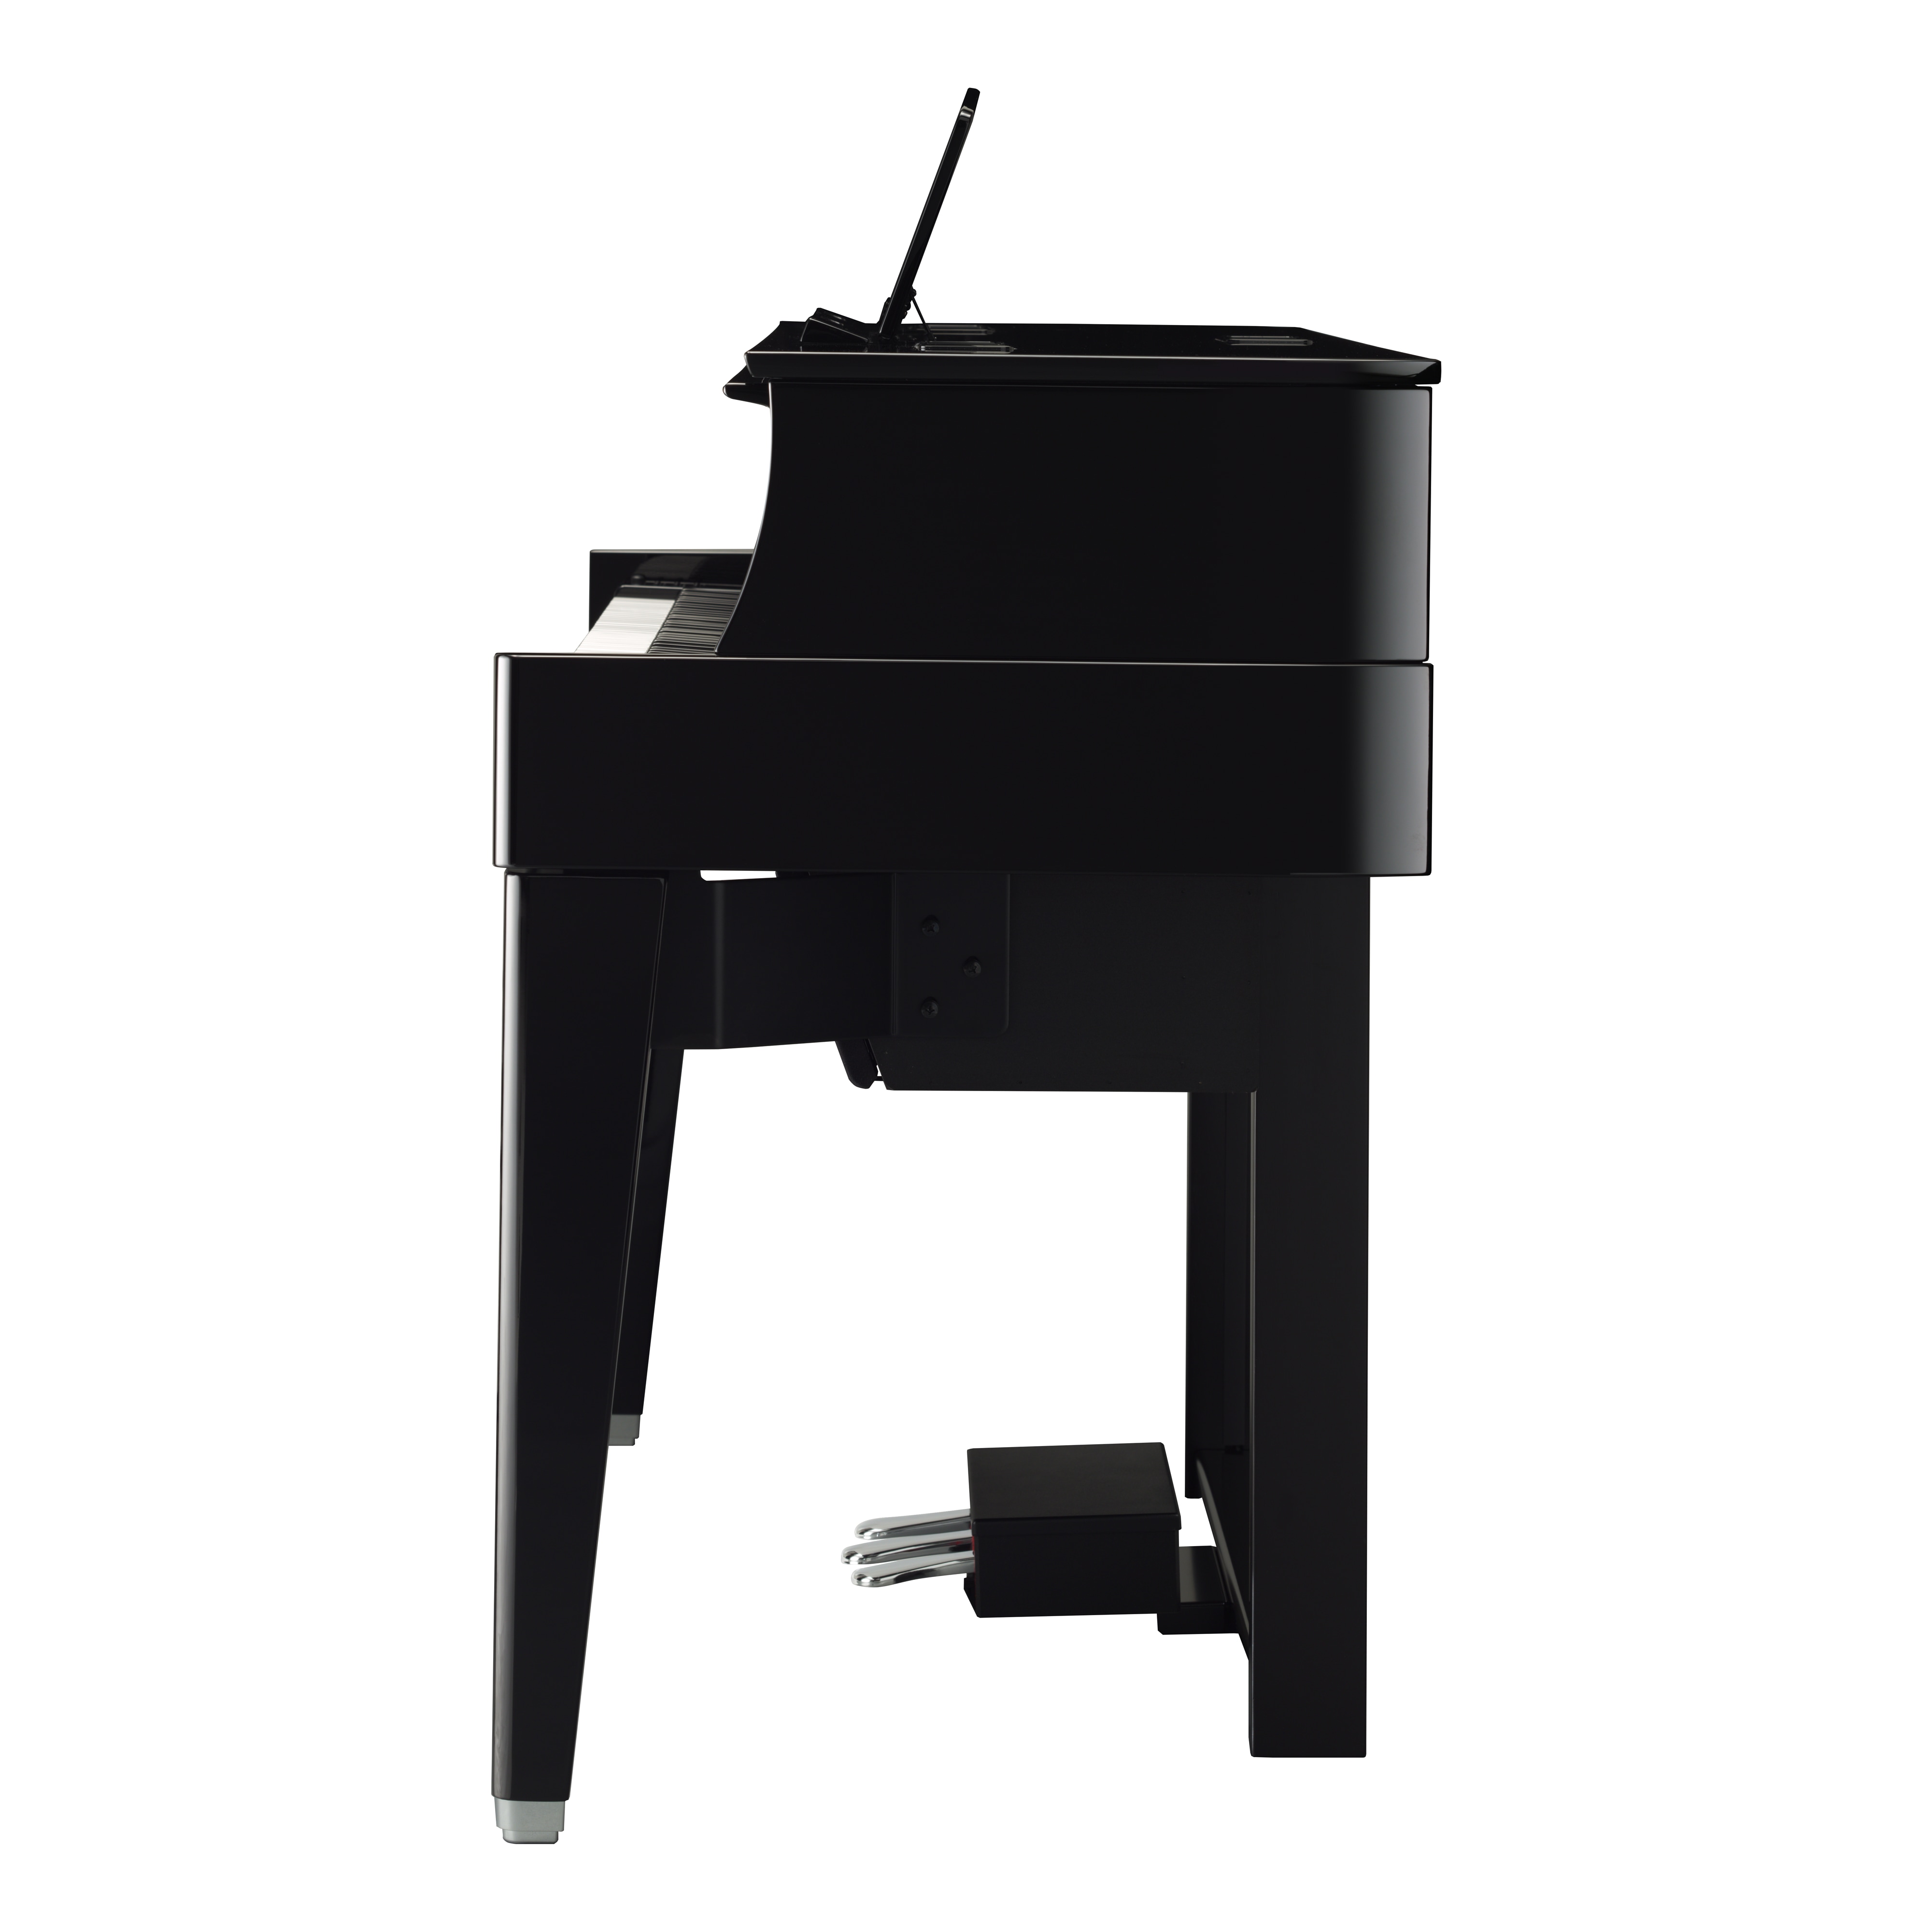 Yamaha AvantGrand N1X Piano - Classic Pianos Seattle & Bellevue Washington